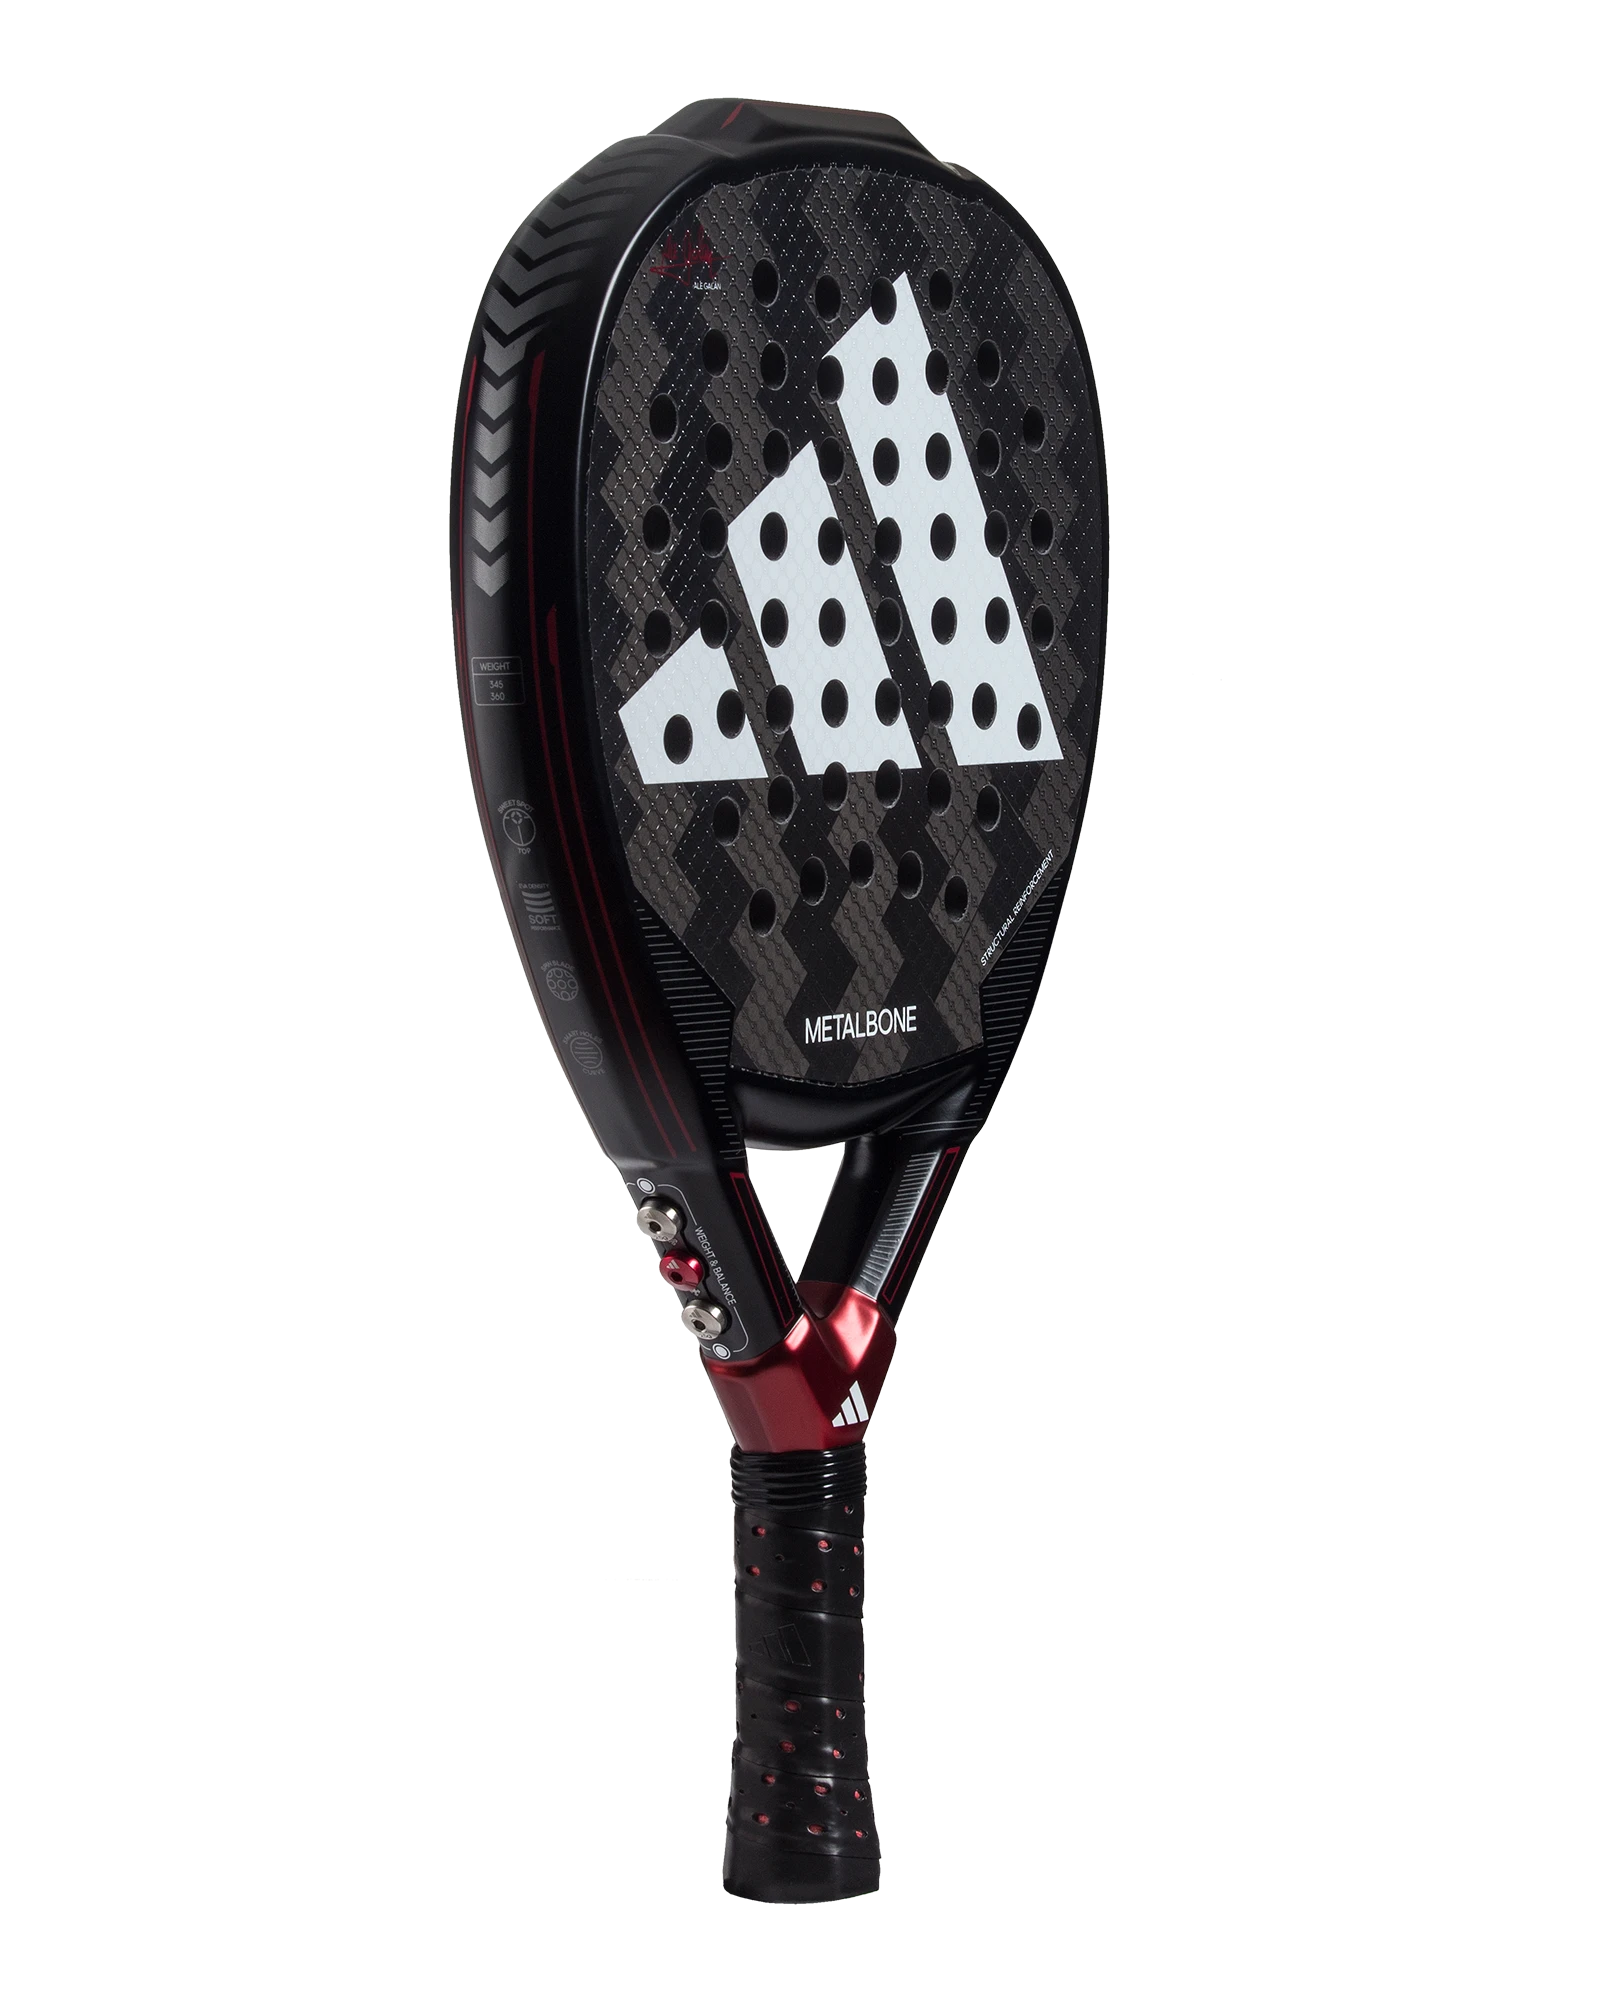 The Adidas Metalbone 3.3 2024 Padel Racket